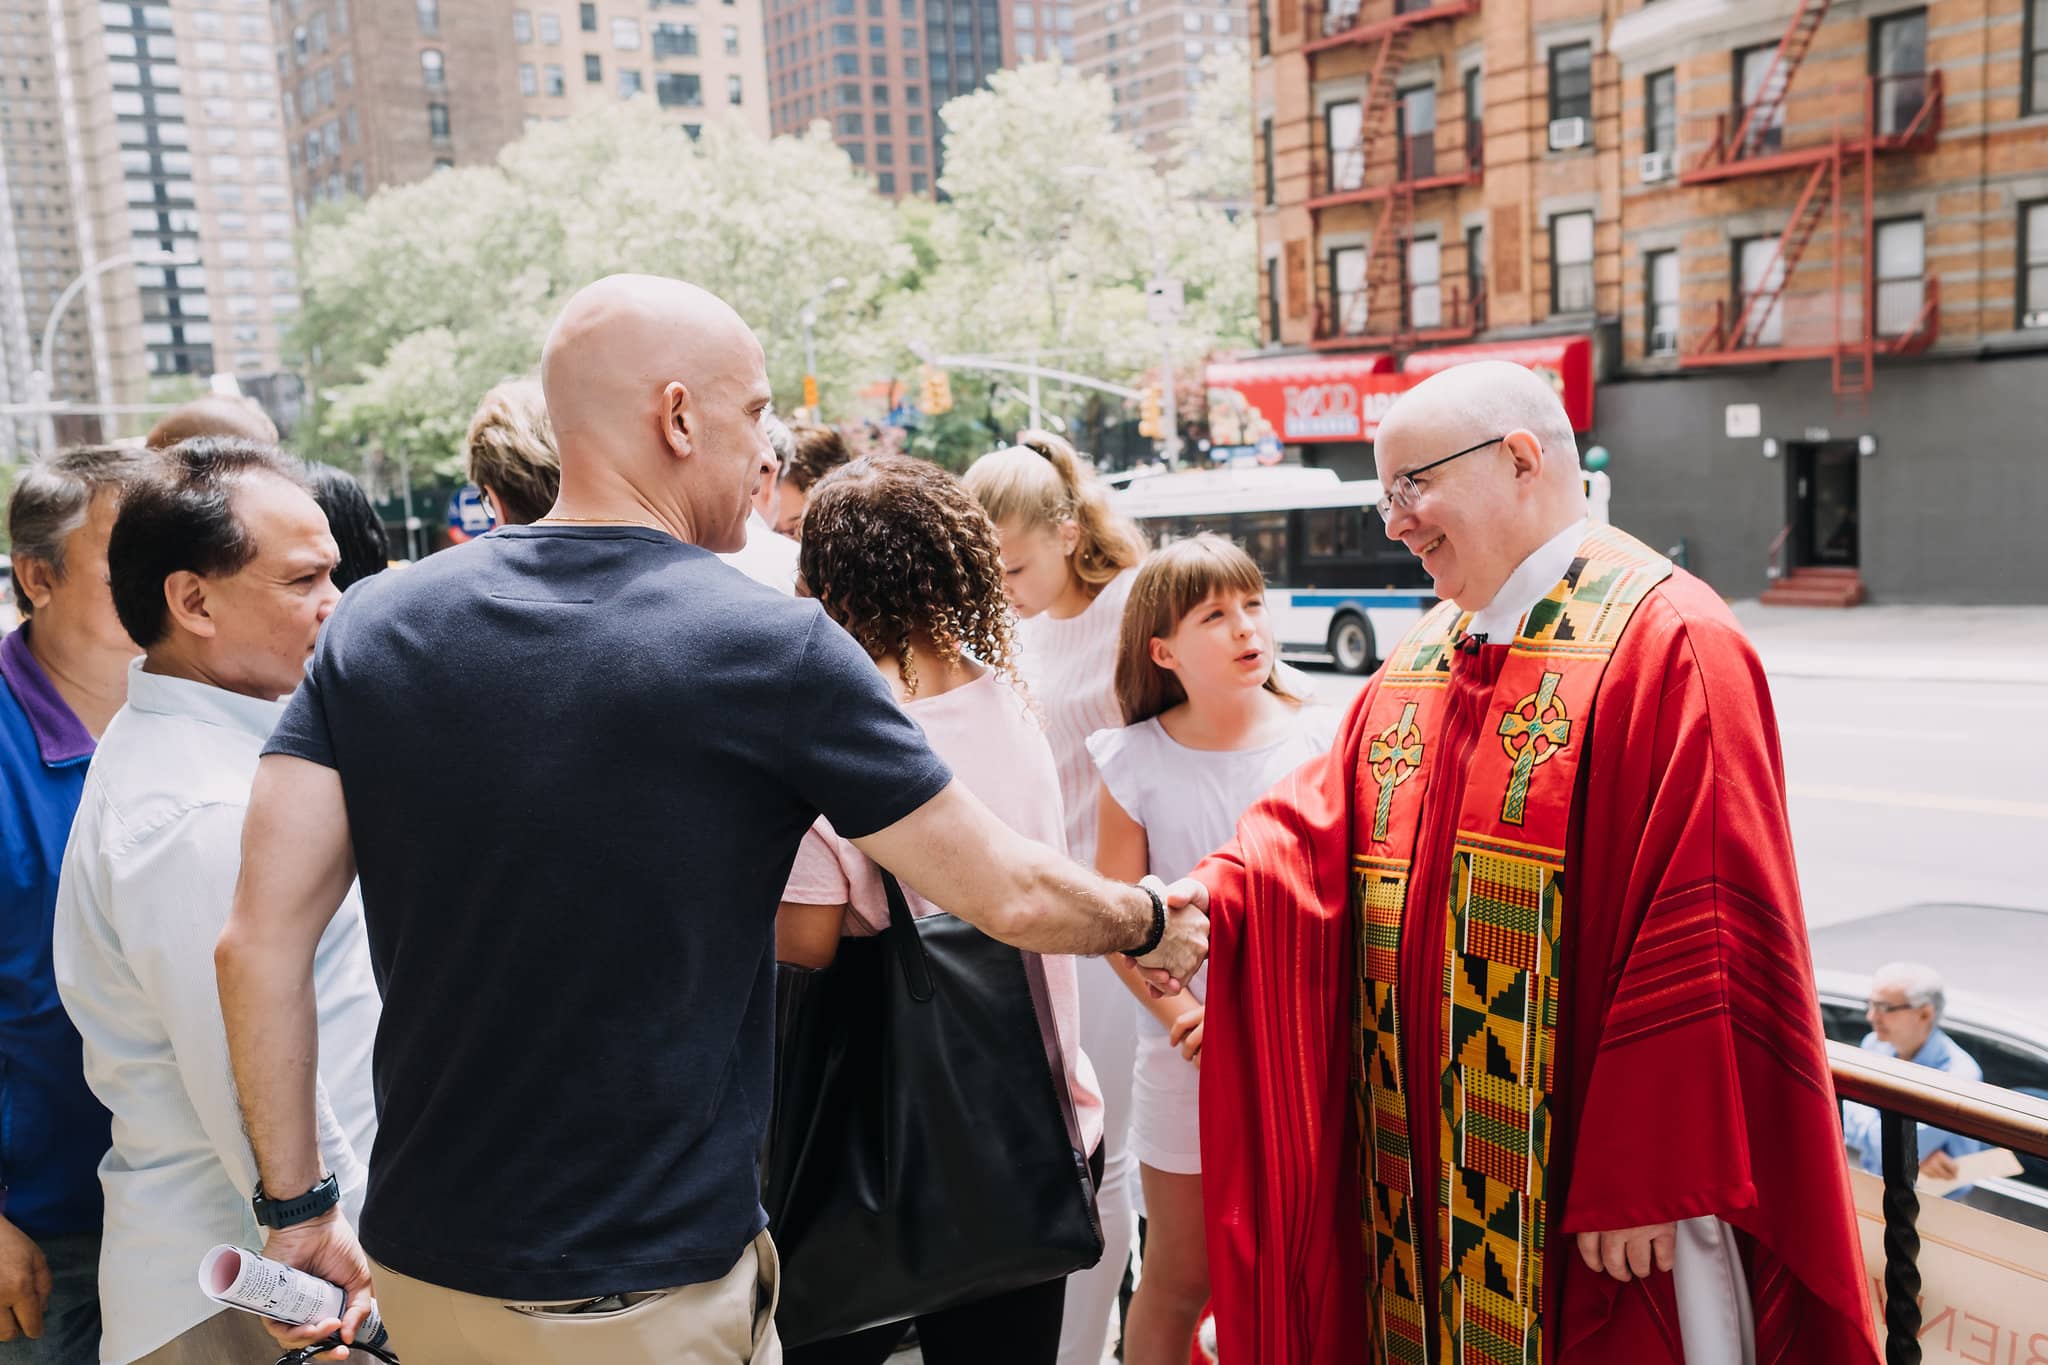 welcoming-visit-us-join-handshake-community-st-francis-de-sales-church-new-york-city.jpg